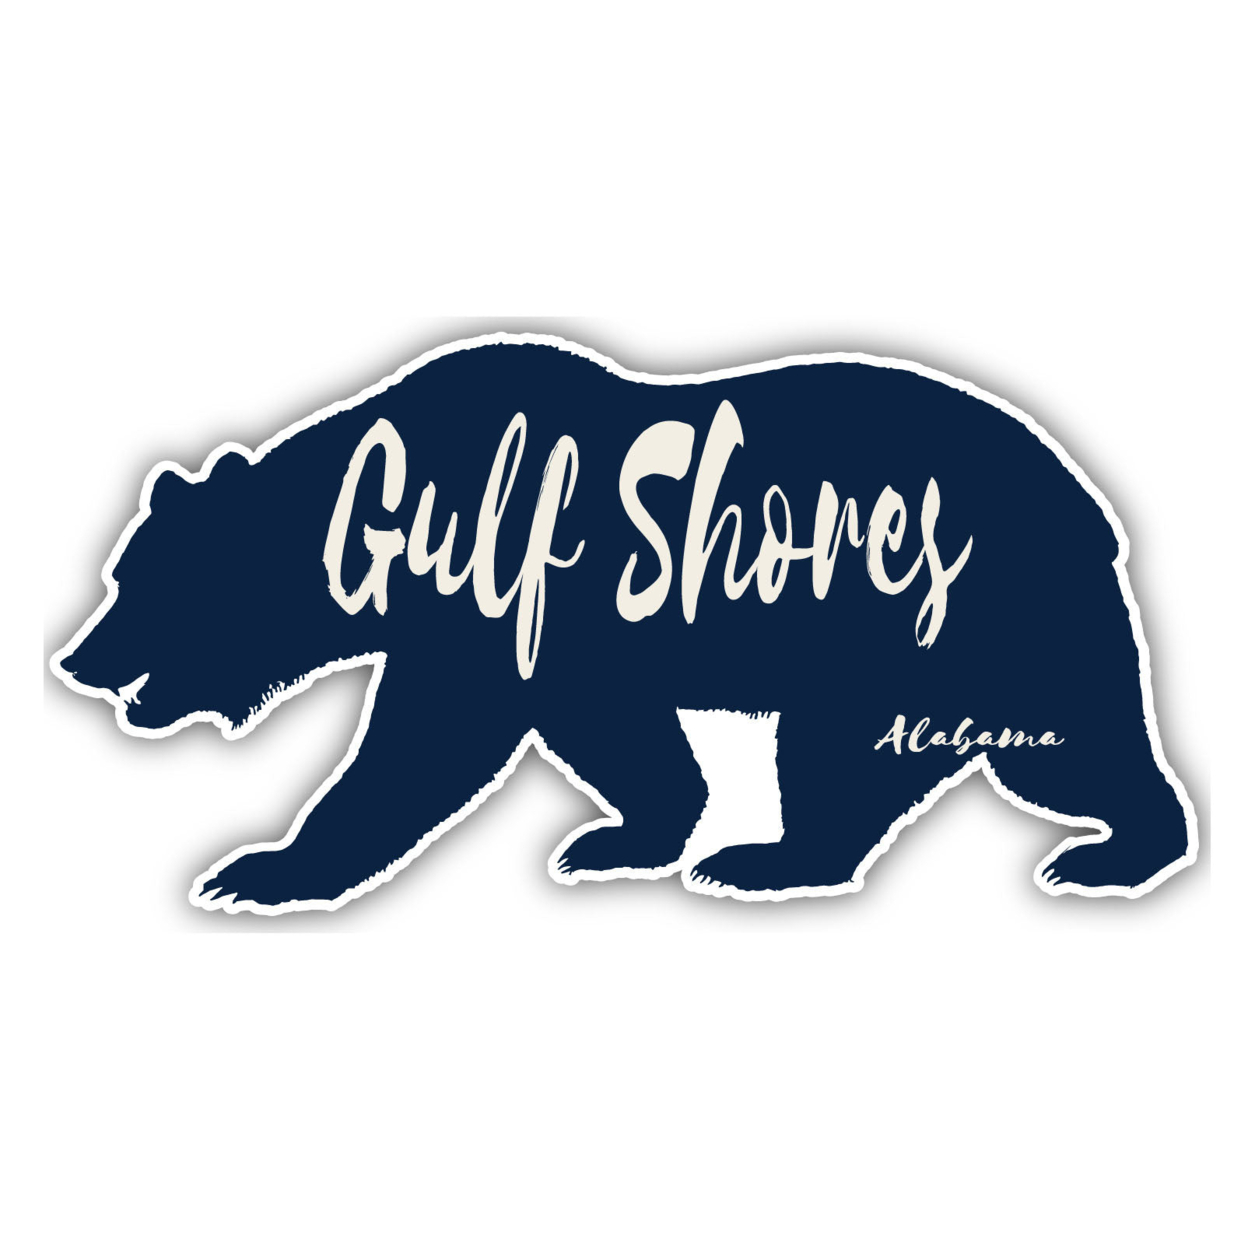 Gulf Shores Alabama Souvenir Decorative Stickers (Choose Theme And Size) - Single Unit, 10-Inch, Tent